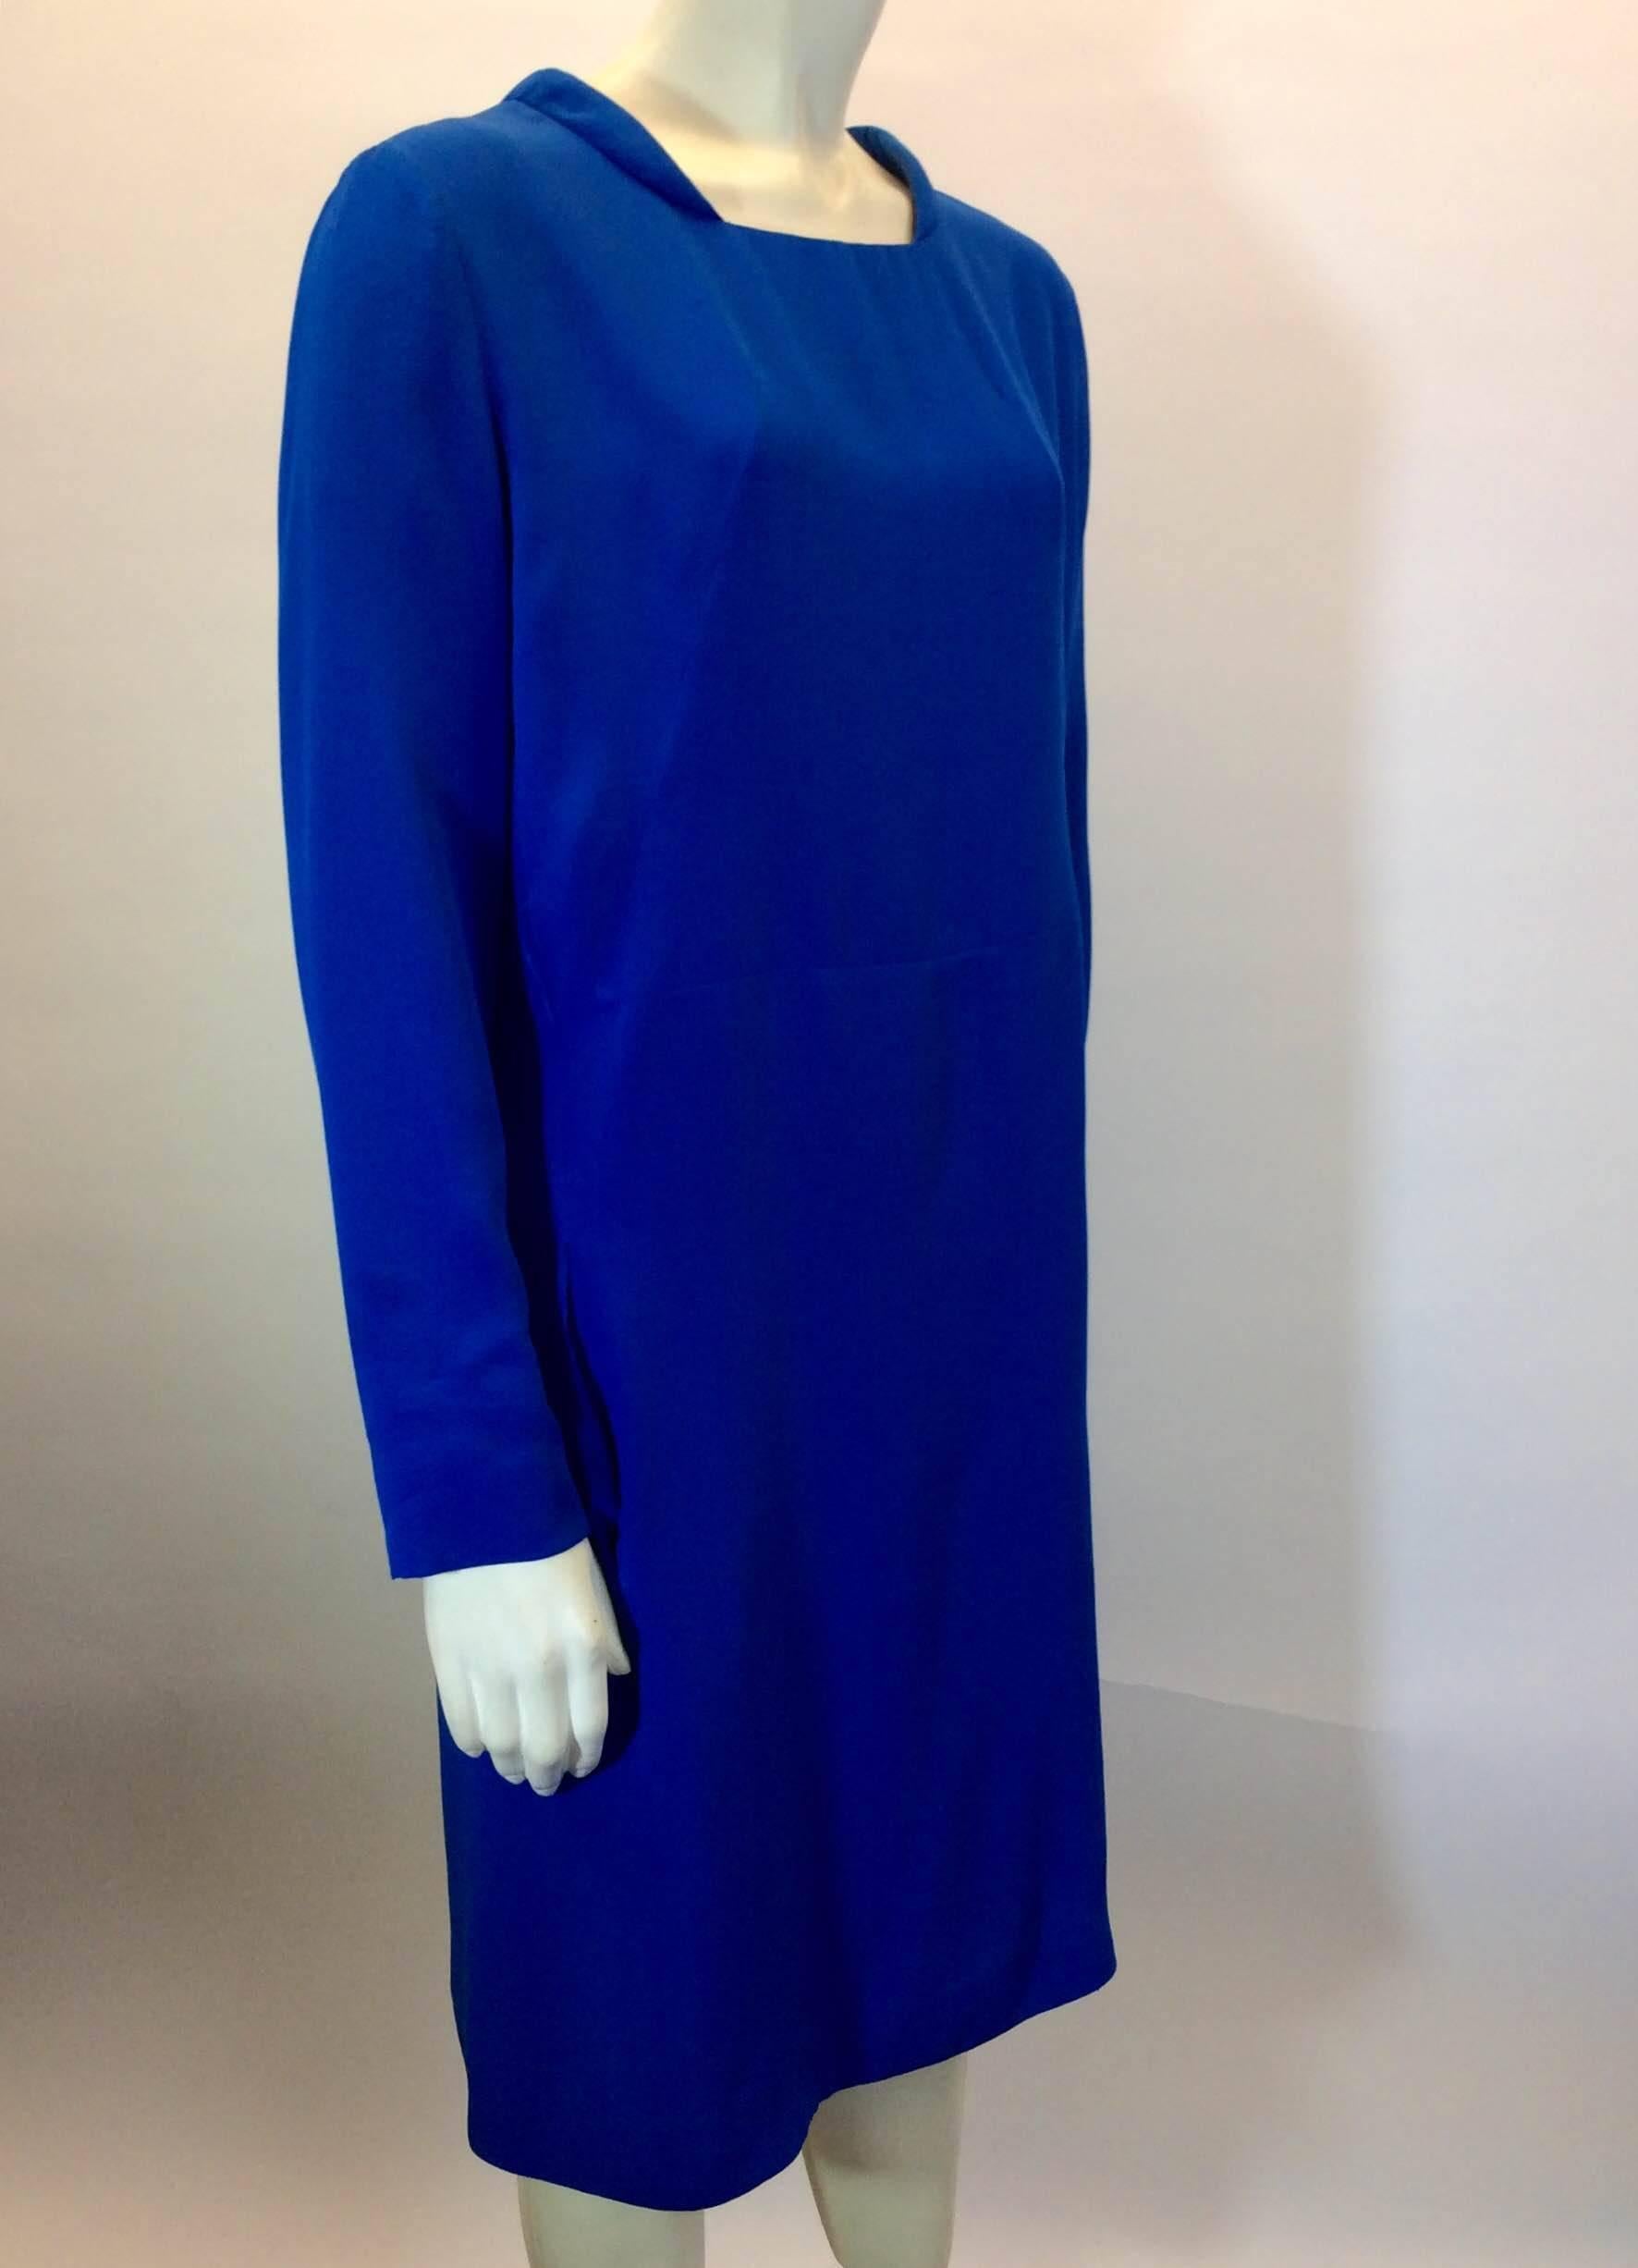 Royal Blue 100% Silk
Single Pocket on either side (Image 6)
Long Sleeve
Pleating On Back
Slightly Cushioned Neck Line